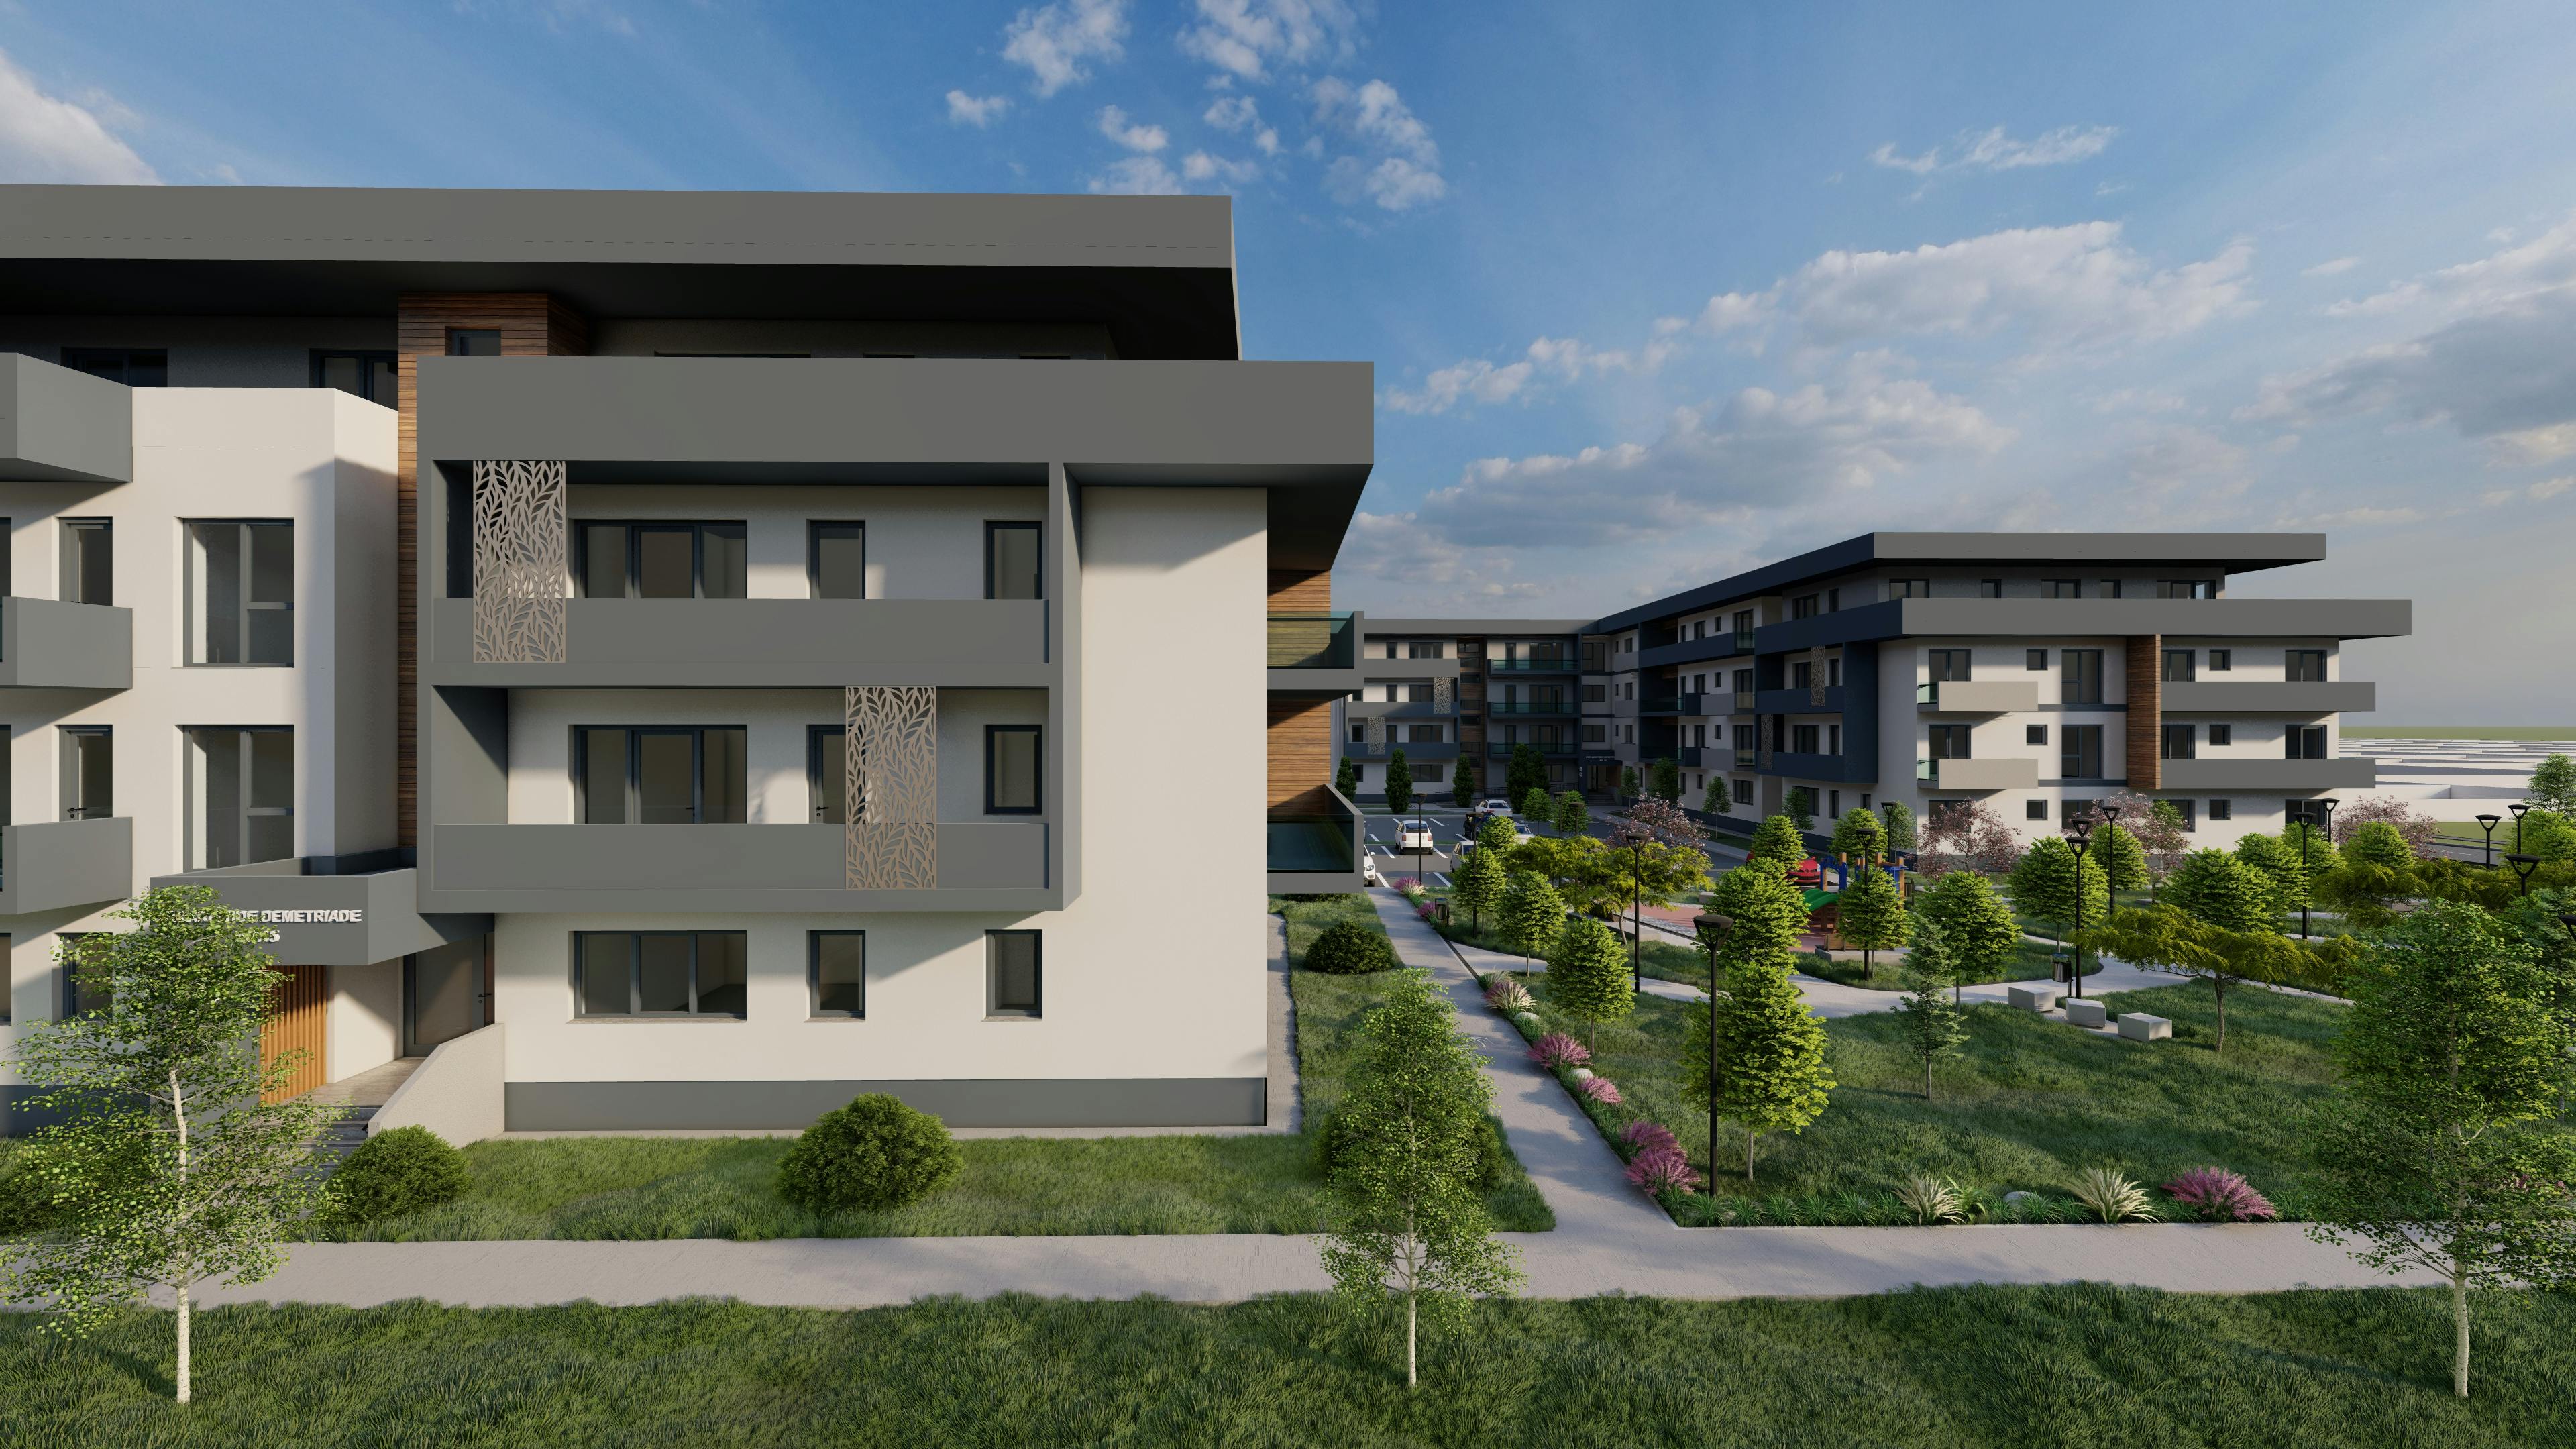 Made in Italy în România: La Oradea se naște Milano 5 by Vannis Marchi, un grandios proiect imobiliar